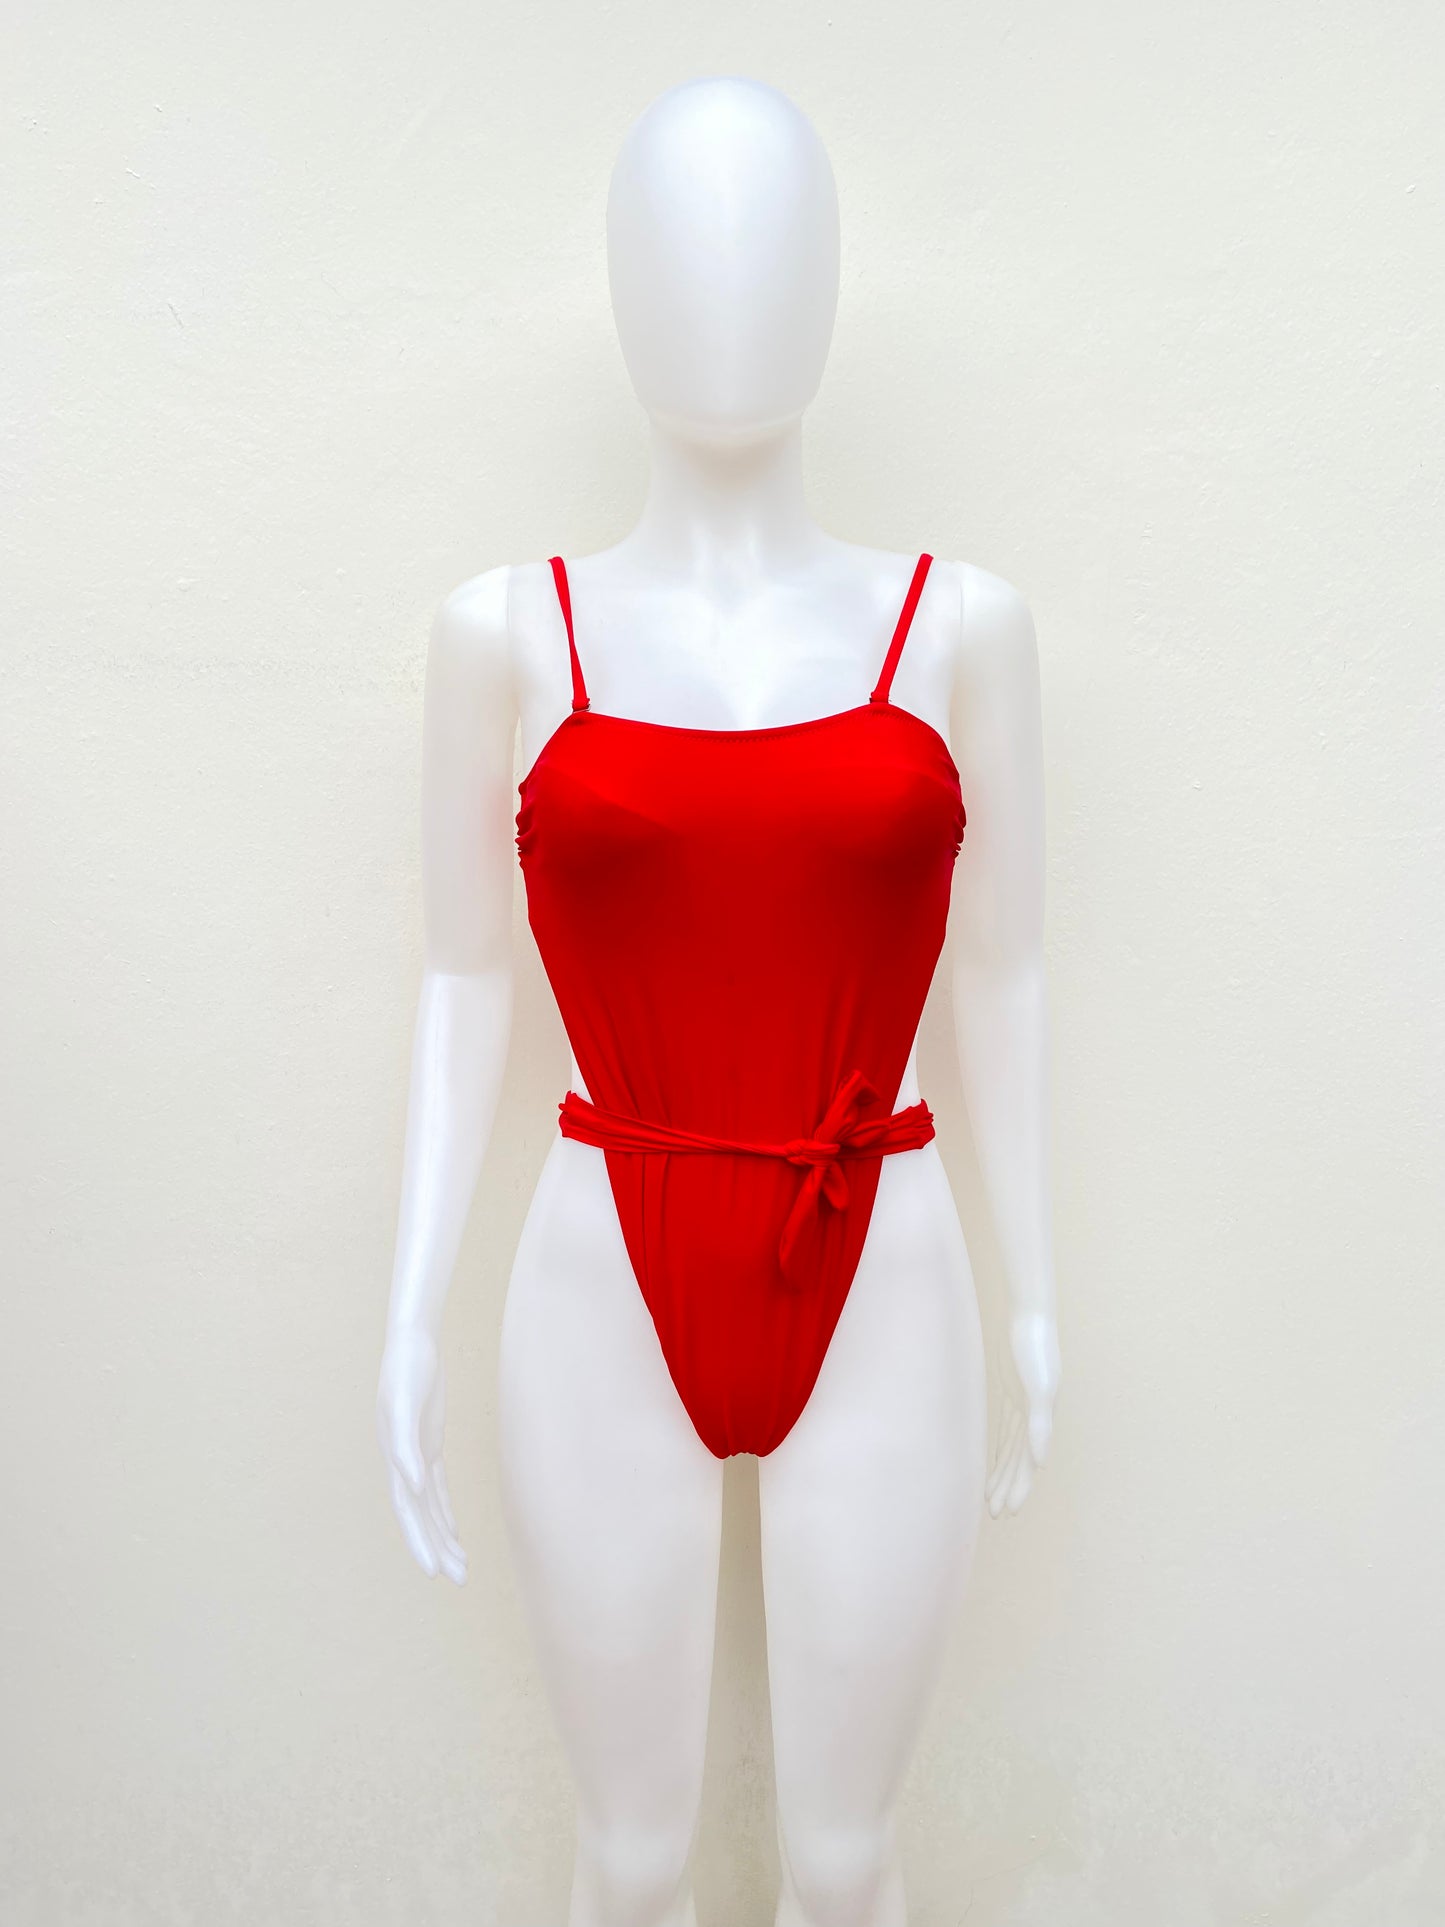 Biquini Mermaid Swimwear original, rojo intenso liso; con lazo ajustable en el centro.